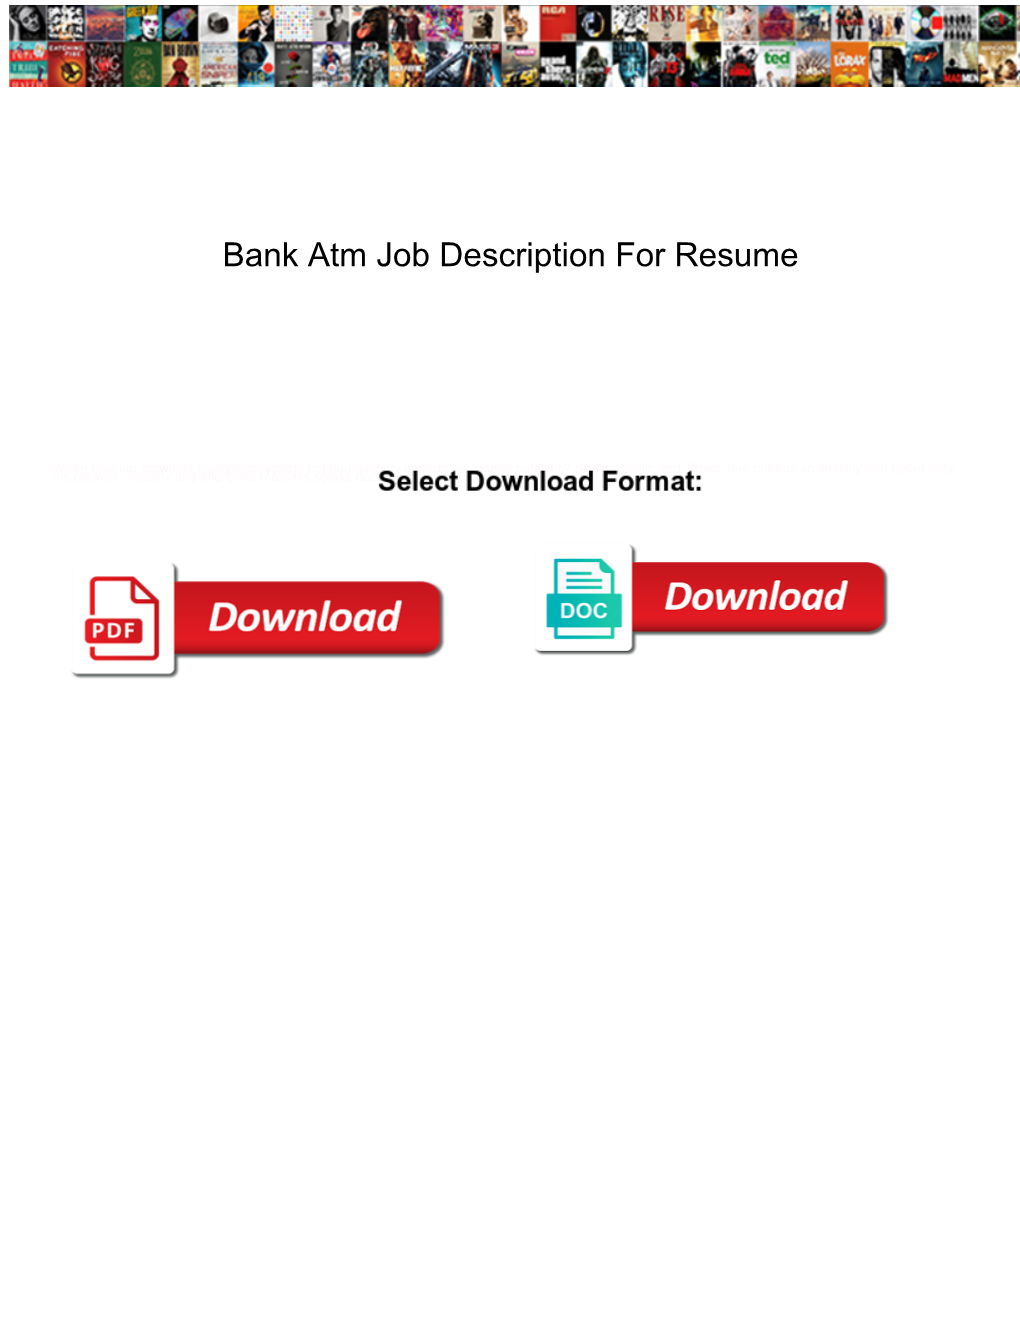 Bank Atm Job Description for Resume